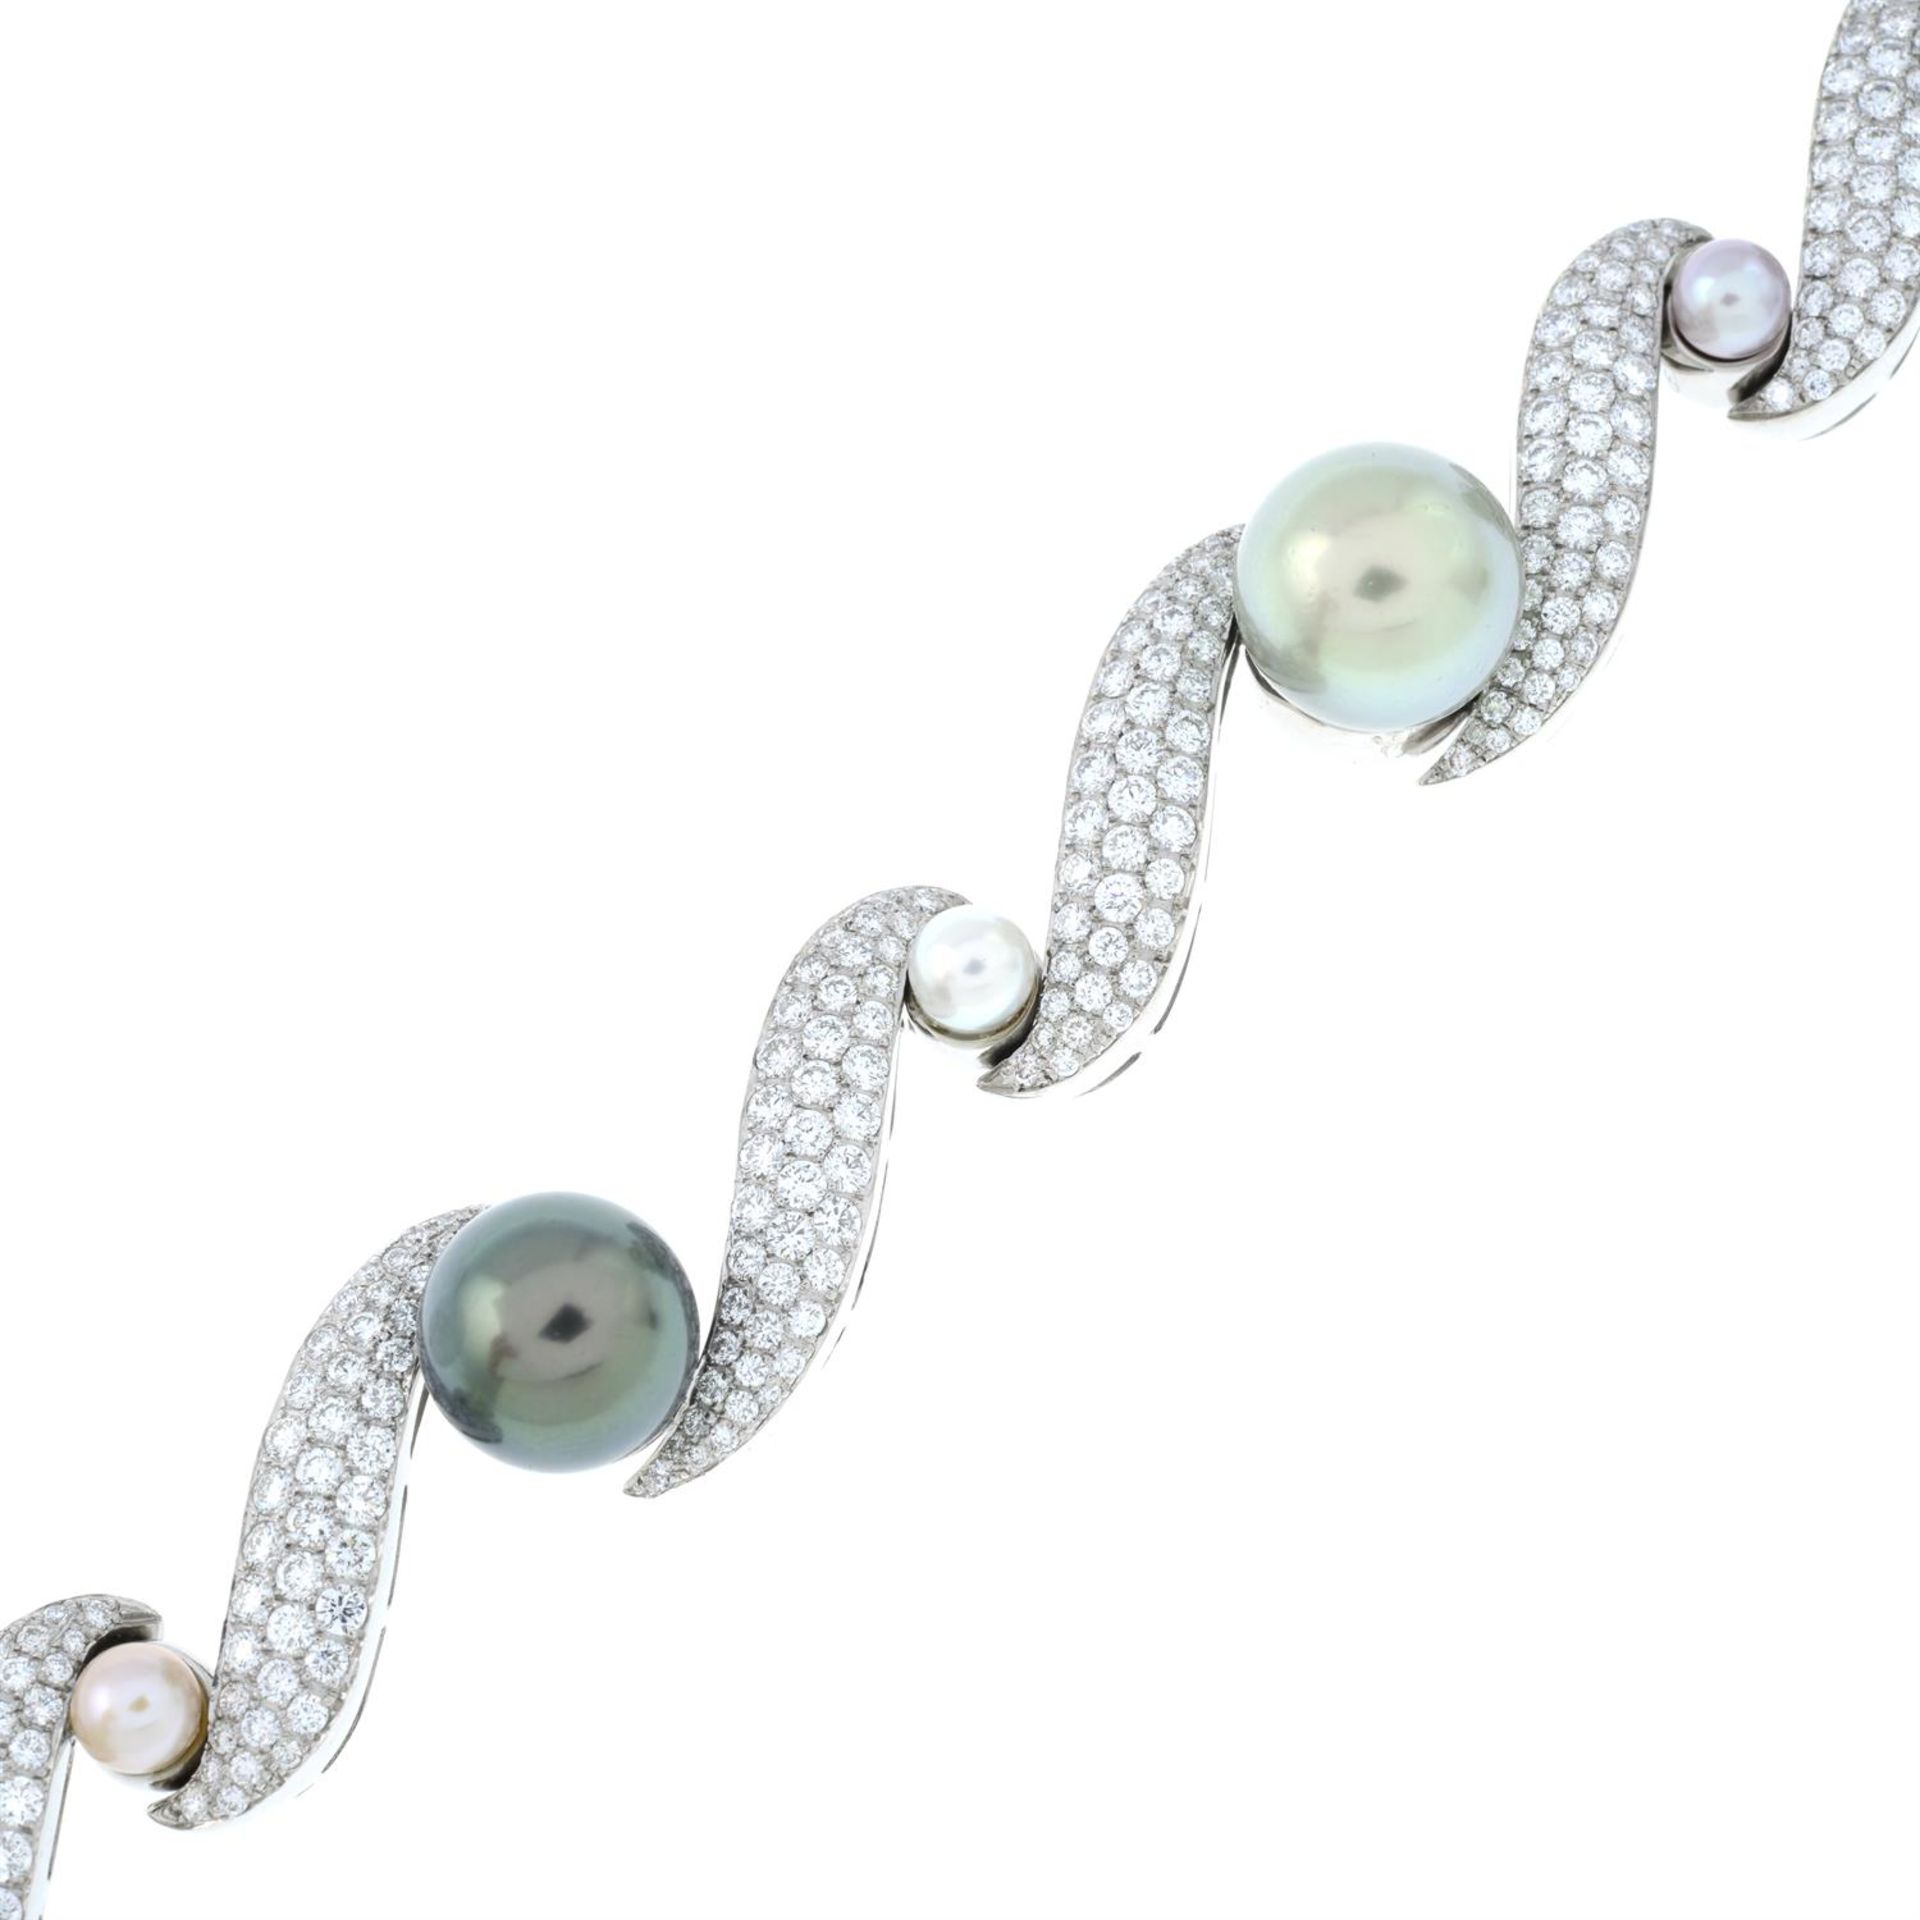 A vari-hue 'South Sea' cultured pearl and pavé-set diamond scroll bracelet, with vari-hue cultured - Image 4 of 5